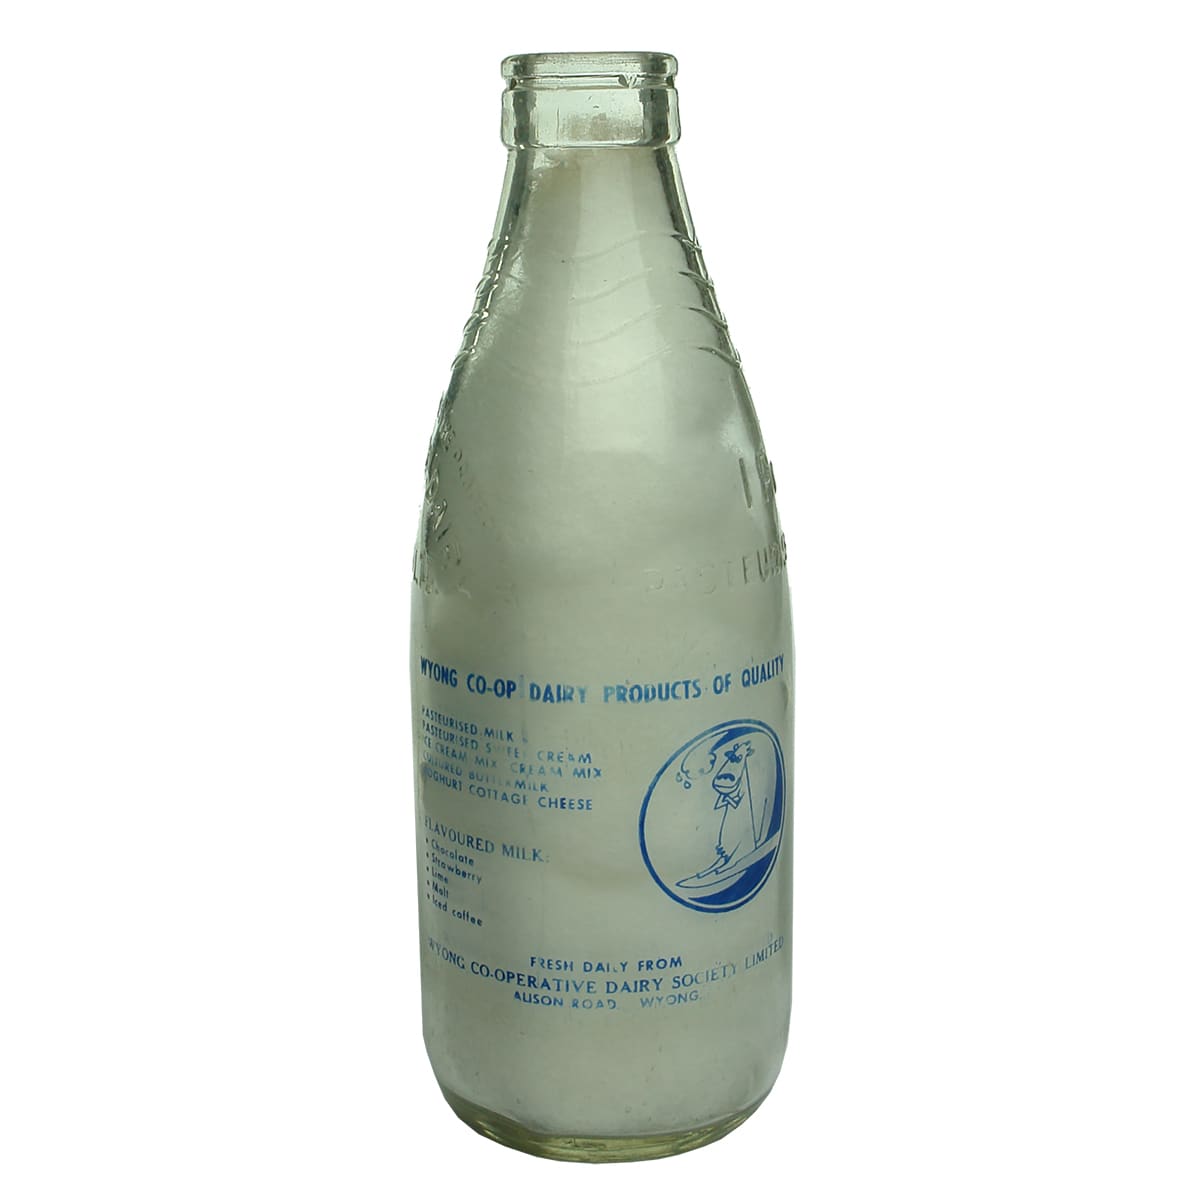 Milk. Wyong Co-Op Dairy Society Ltd. Foil Top. Blue Print. 1 Pint.